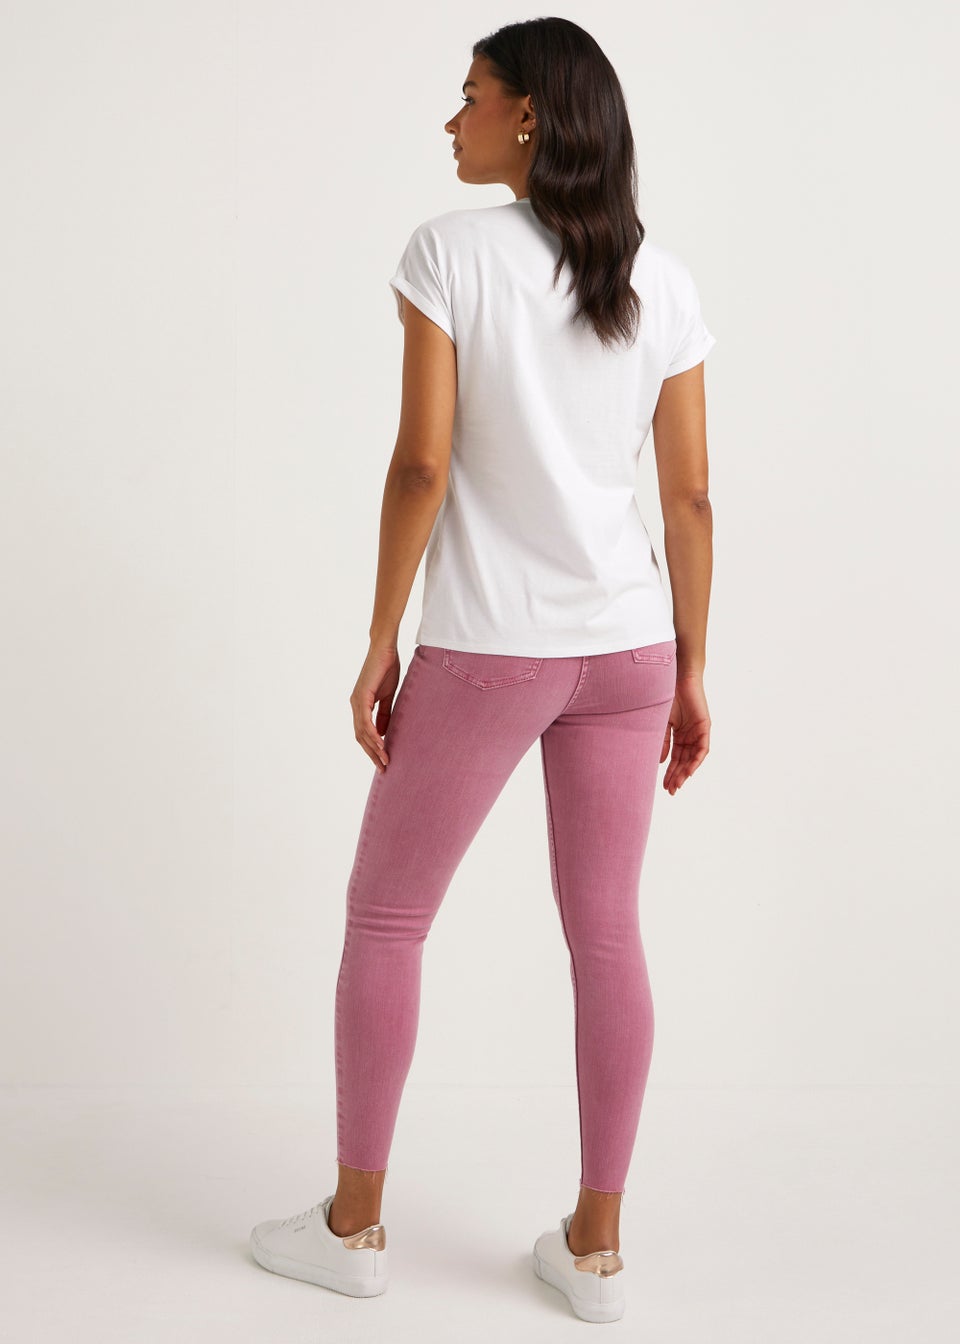 April Pink Ankle Grazer Super Skinny Jeans - Matalan